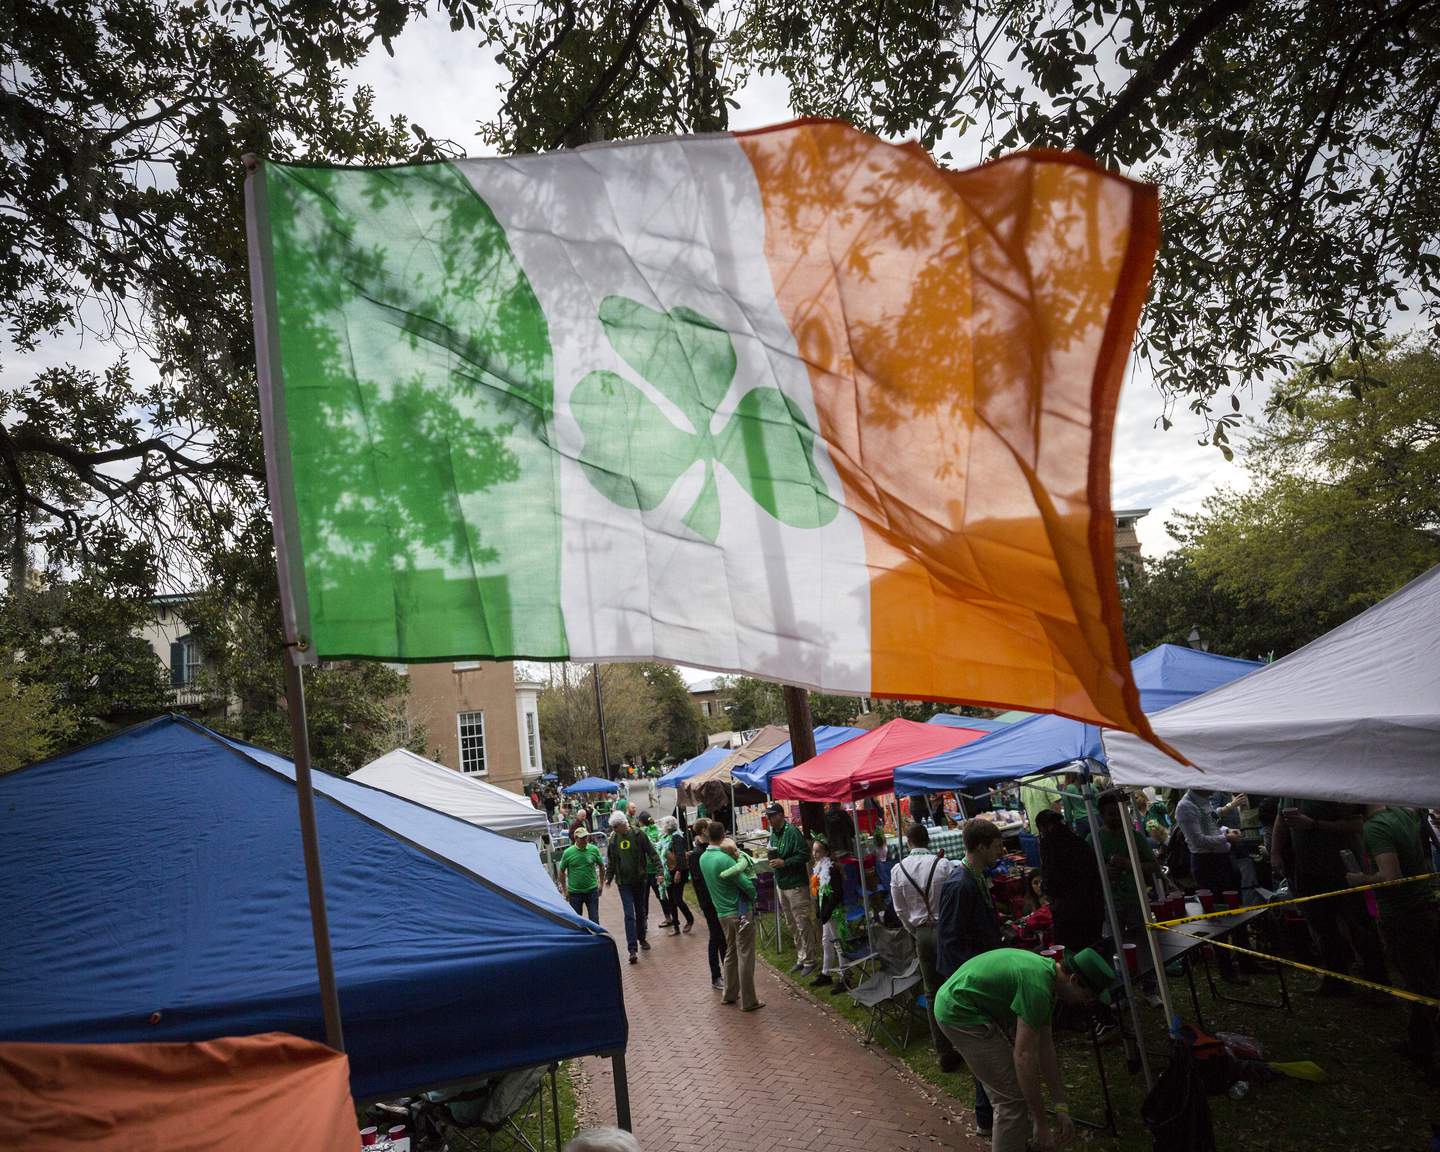 Parade canceled, Savannah plans virtual St. Patrick’s events